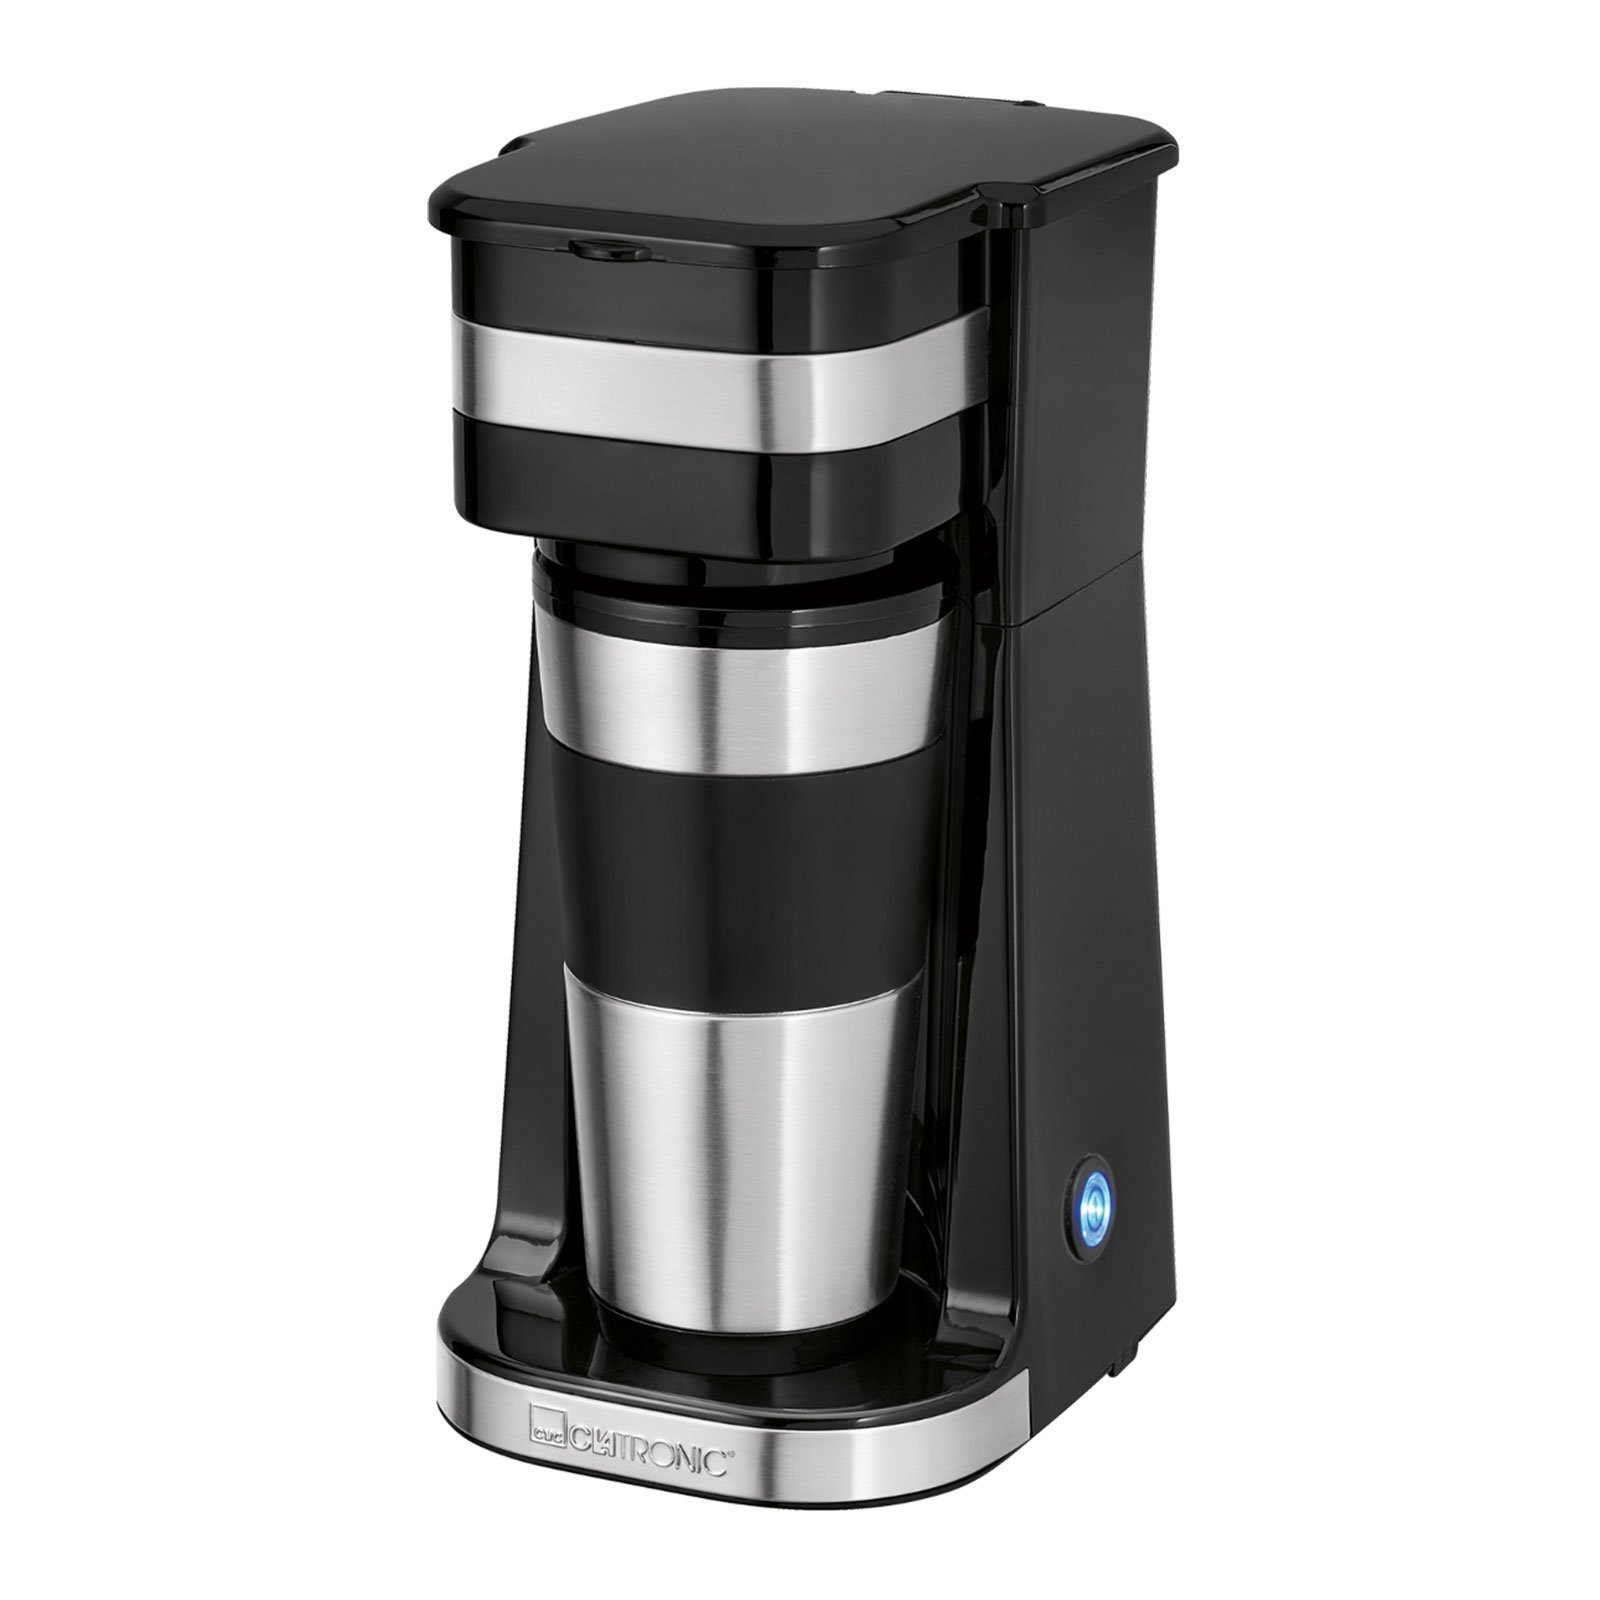 CLATRONIC Filterkaffeemaschine KA 3733 1-Tassen-Thermo-Kaffeeautomat  Edelstahl, 1 Tassen-Kaffeeautomat für Filterkaffee in hochwertigem  Edelstahldesign